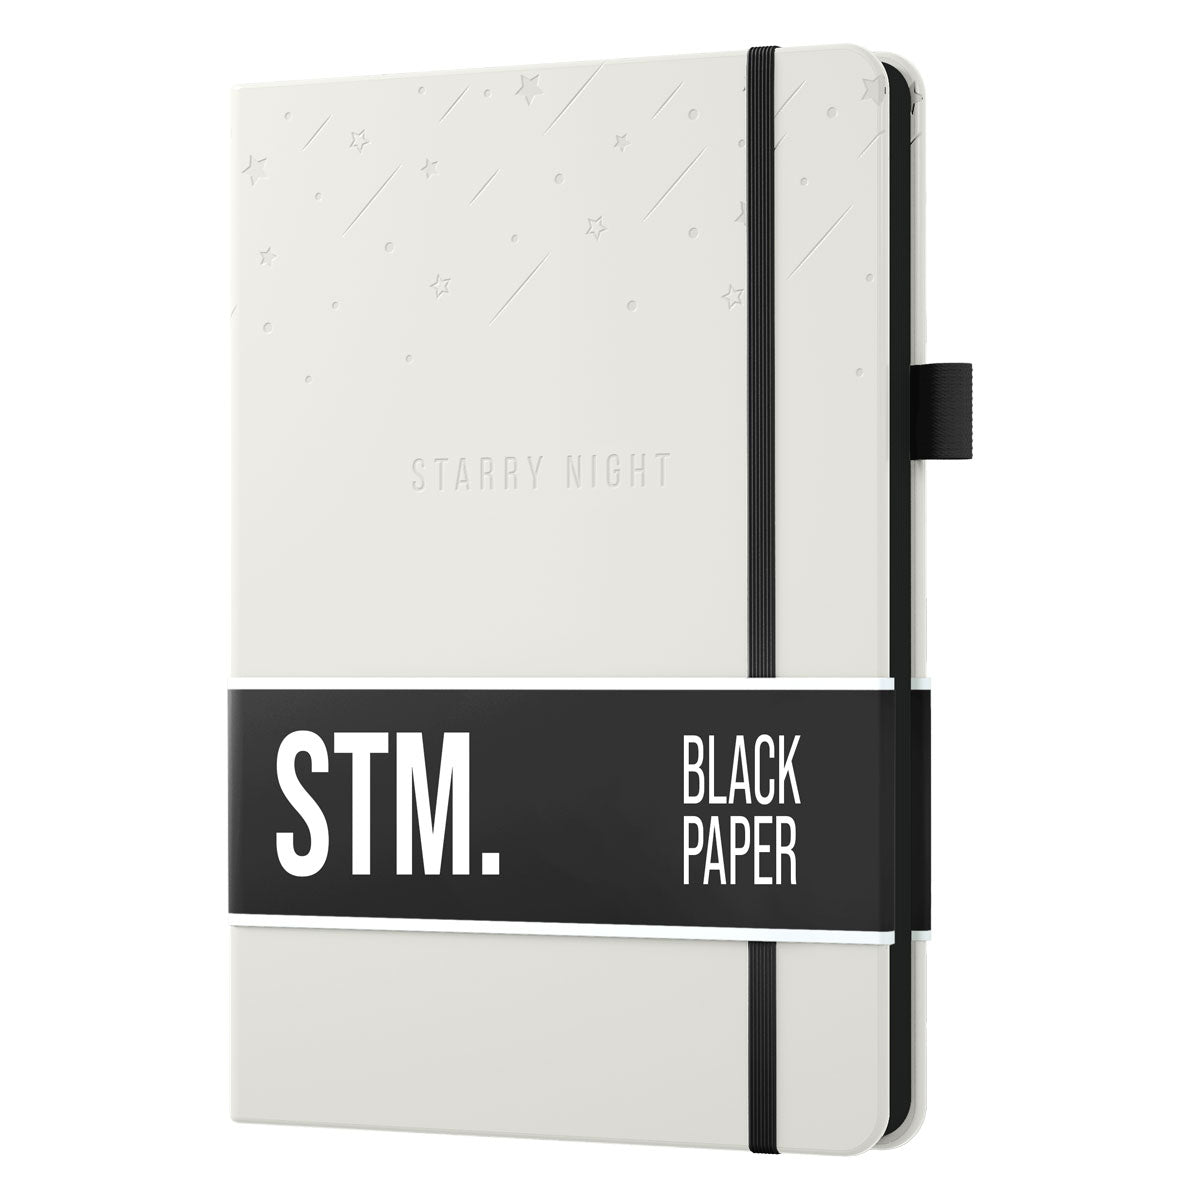 Black Paper Journal